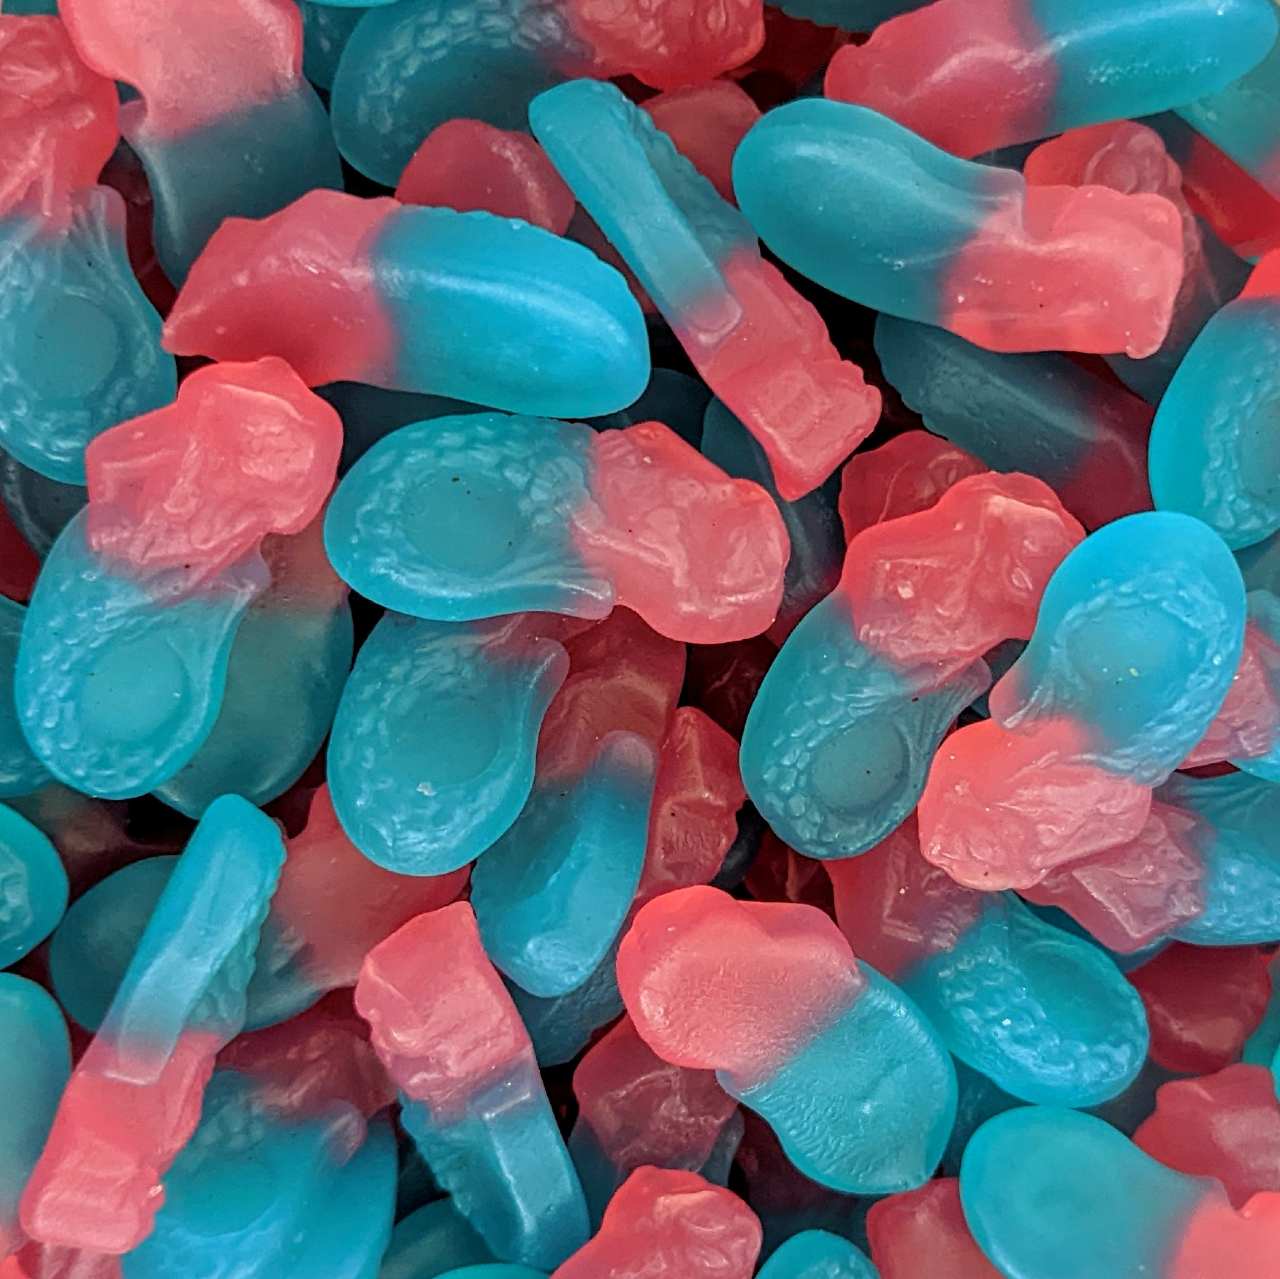 Bubblegum mermaids vegan sweets